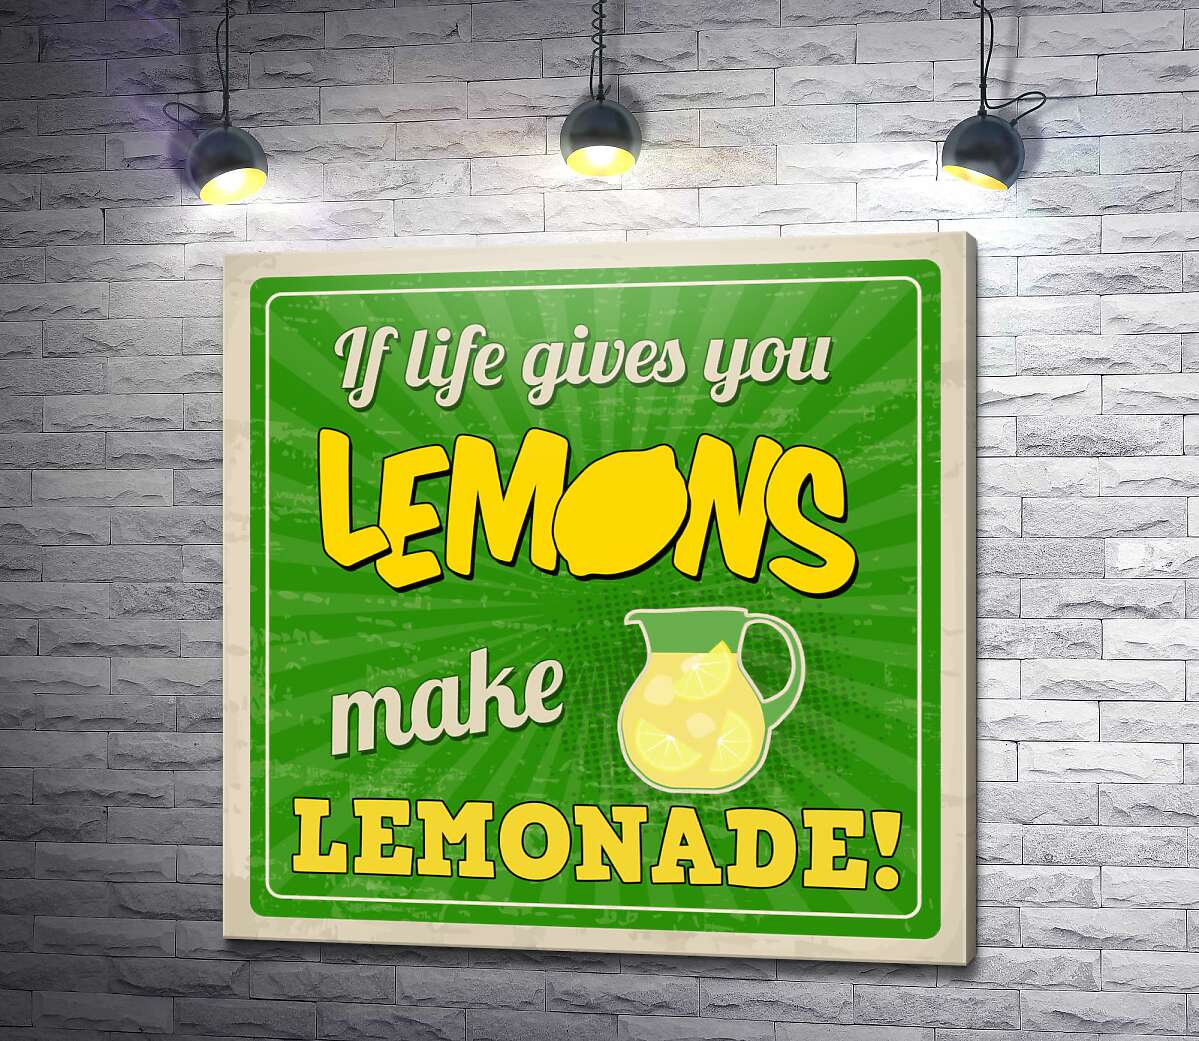 картина Мотивационная надпись: "If life gives you lemons make lemonade!"